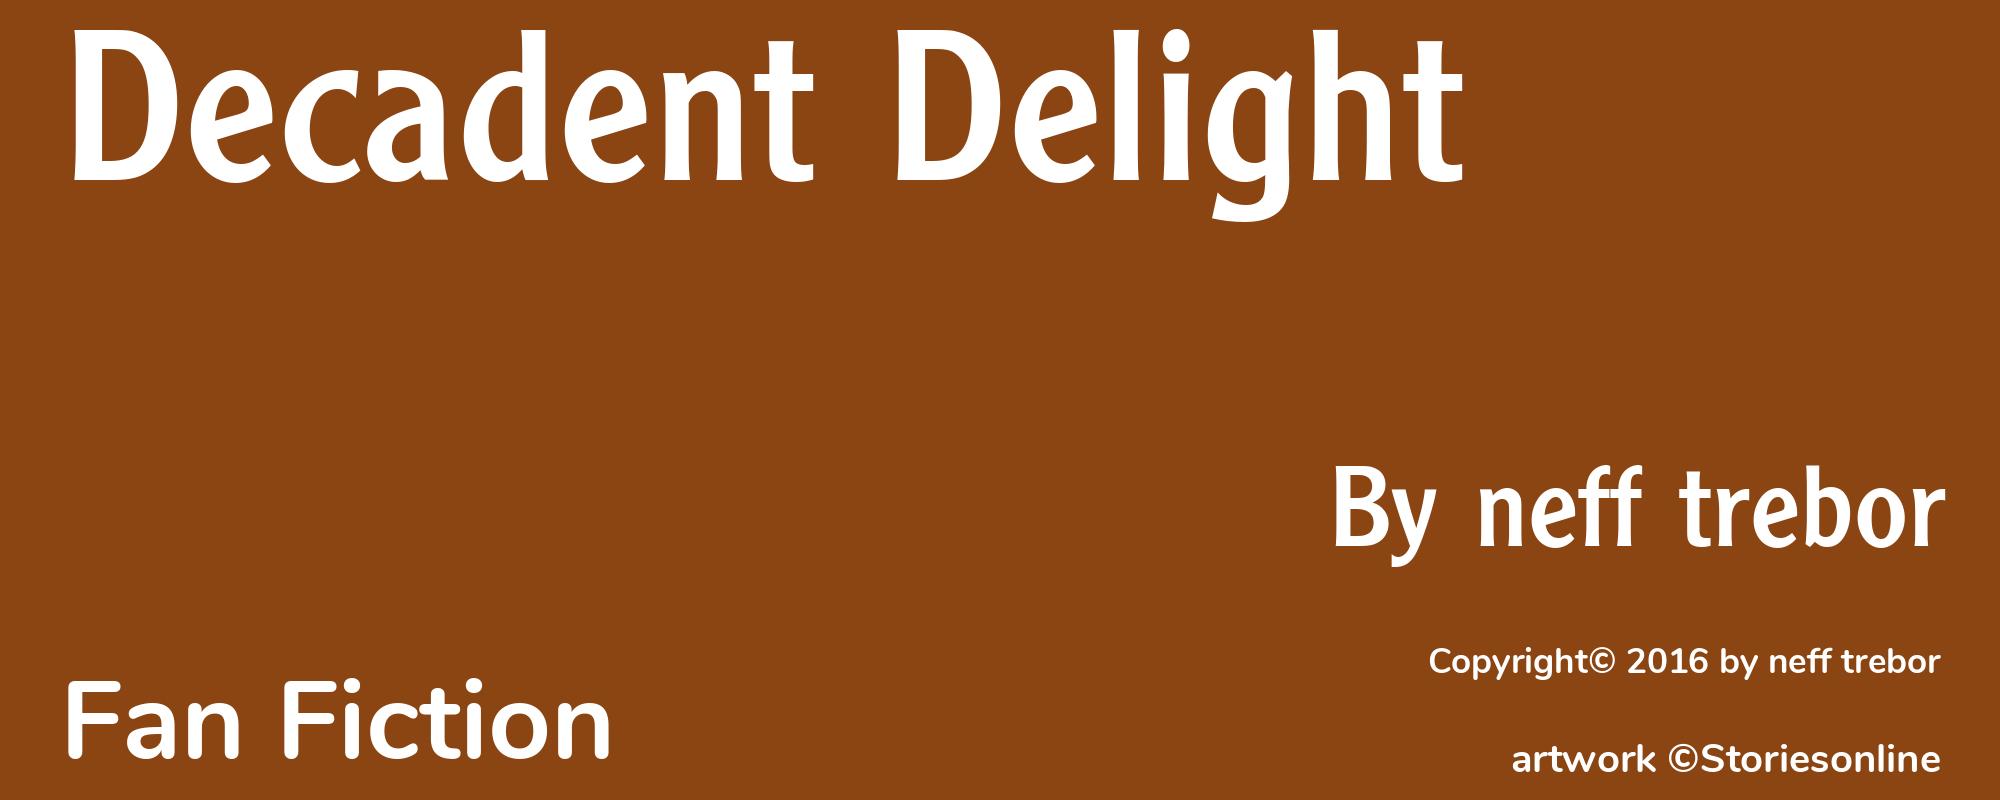 Decadent Delight - Cover